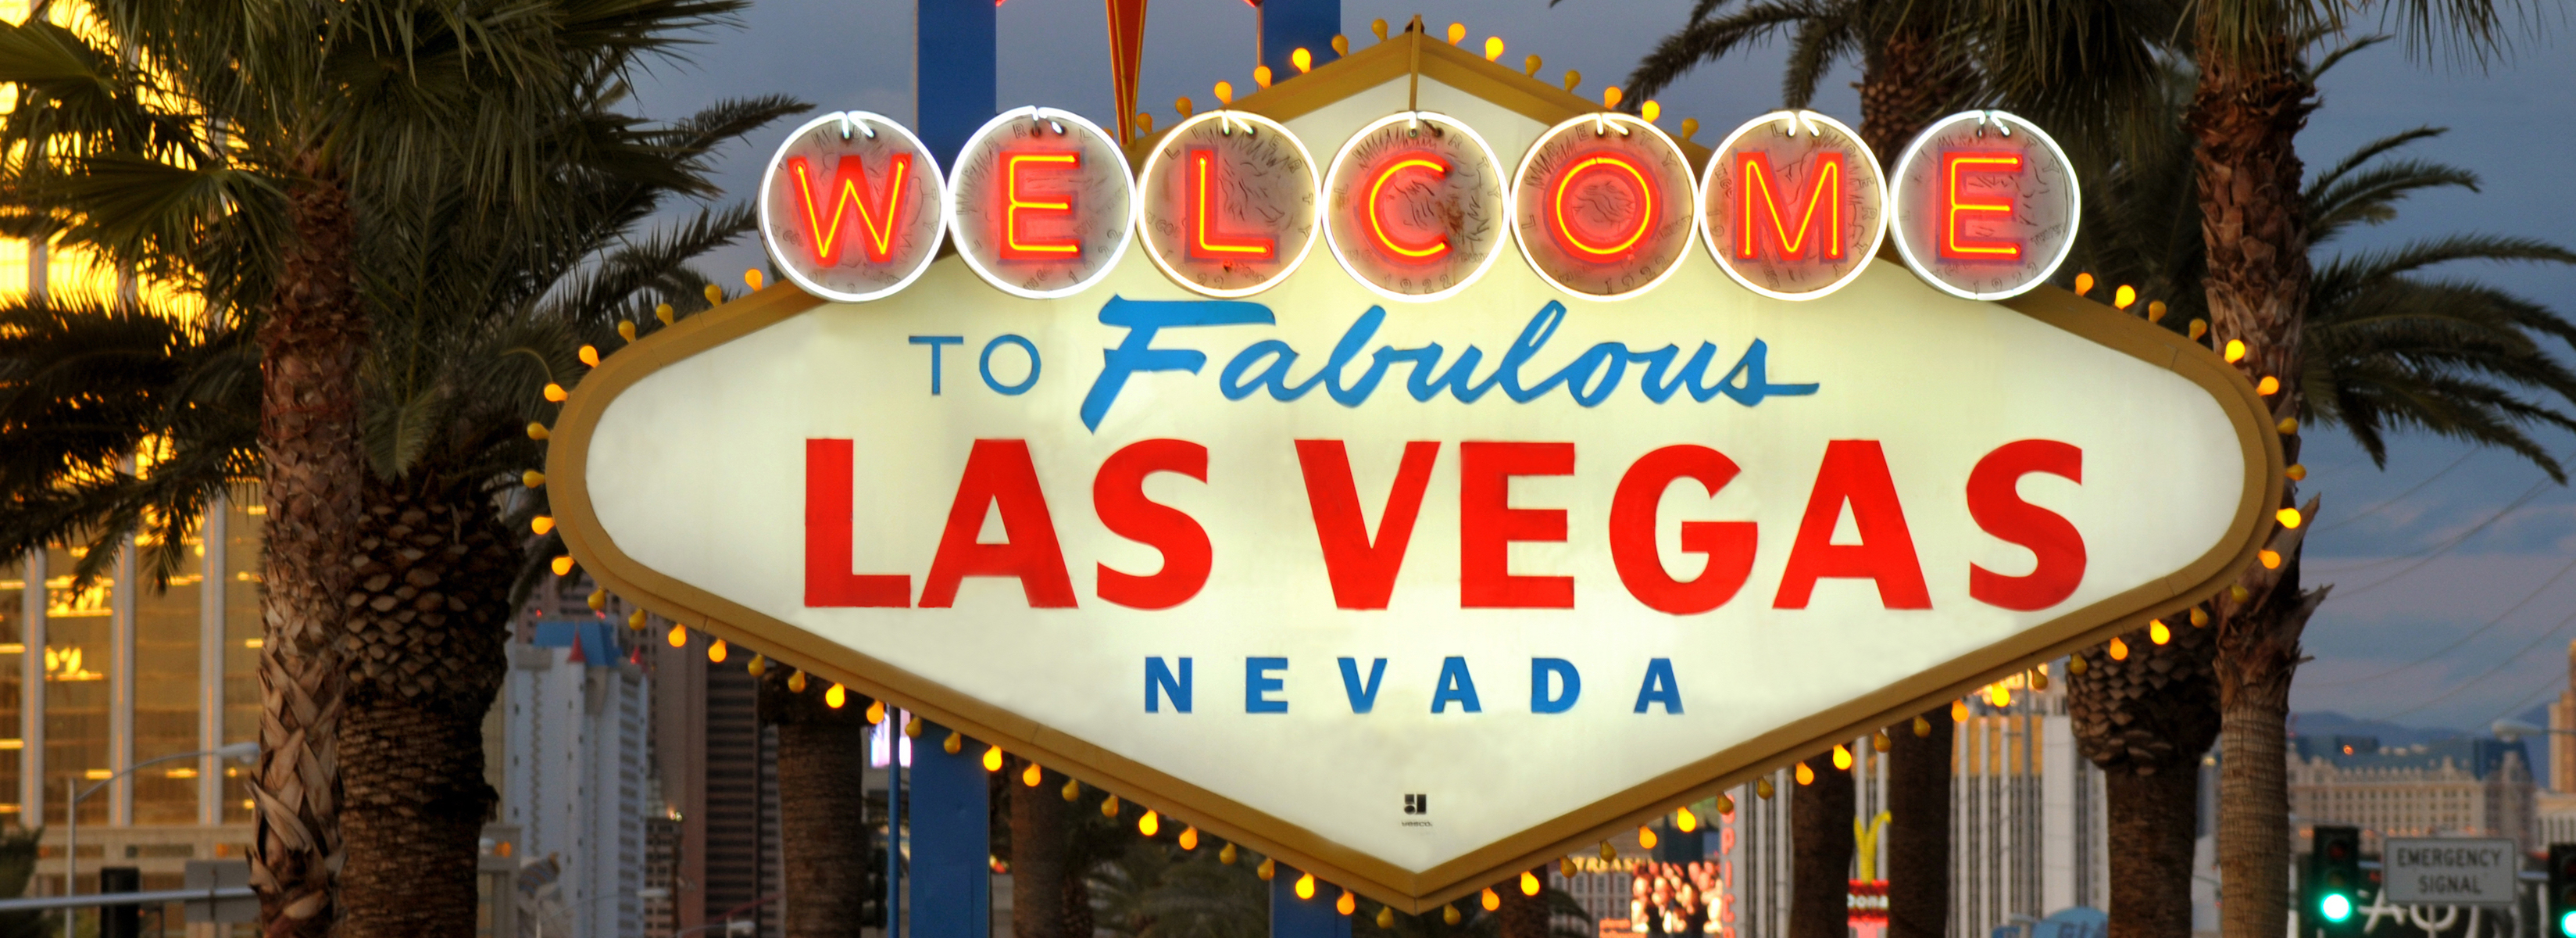 Welcome to Las Vegas sign on the Las Vegas Strip. 11/13/09